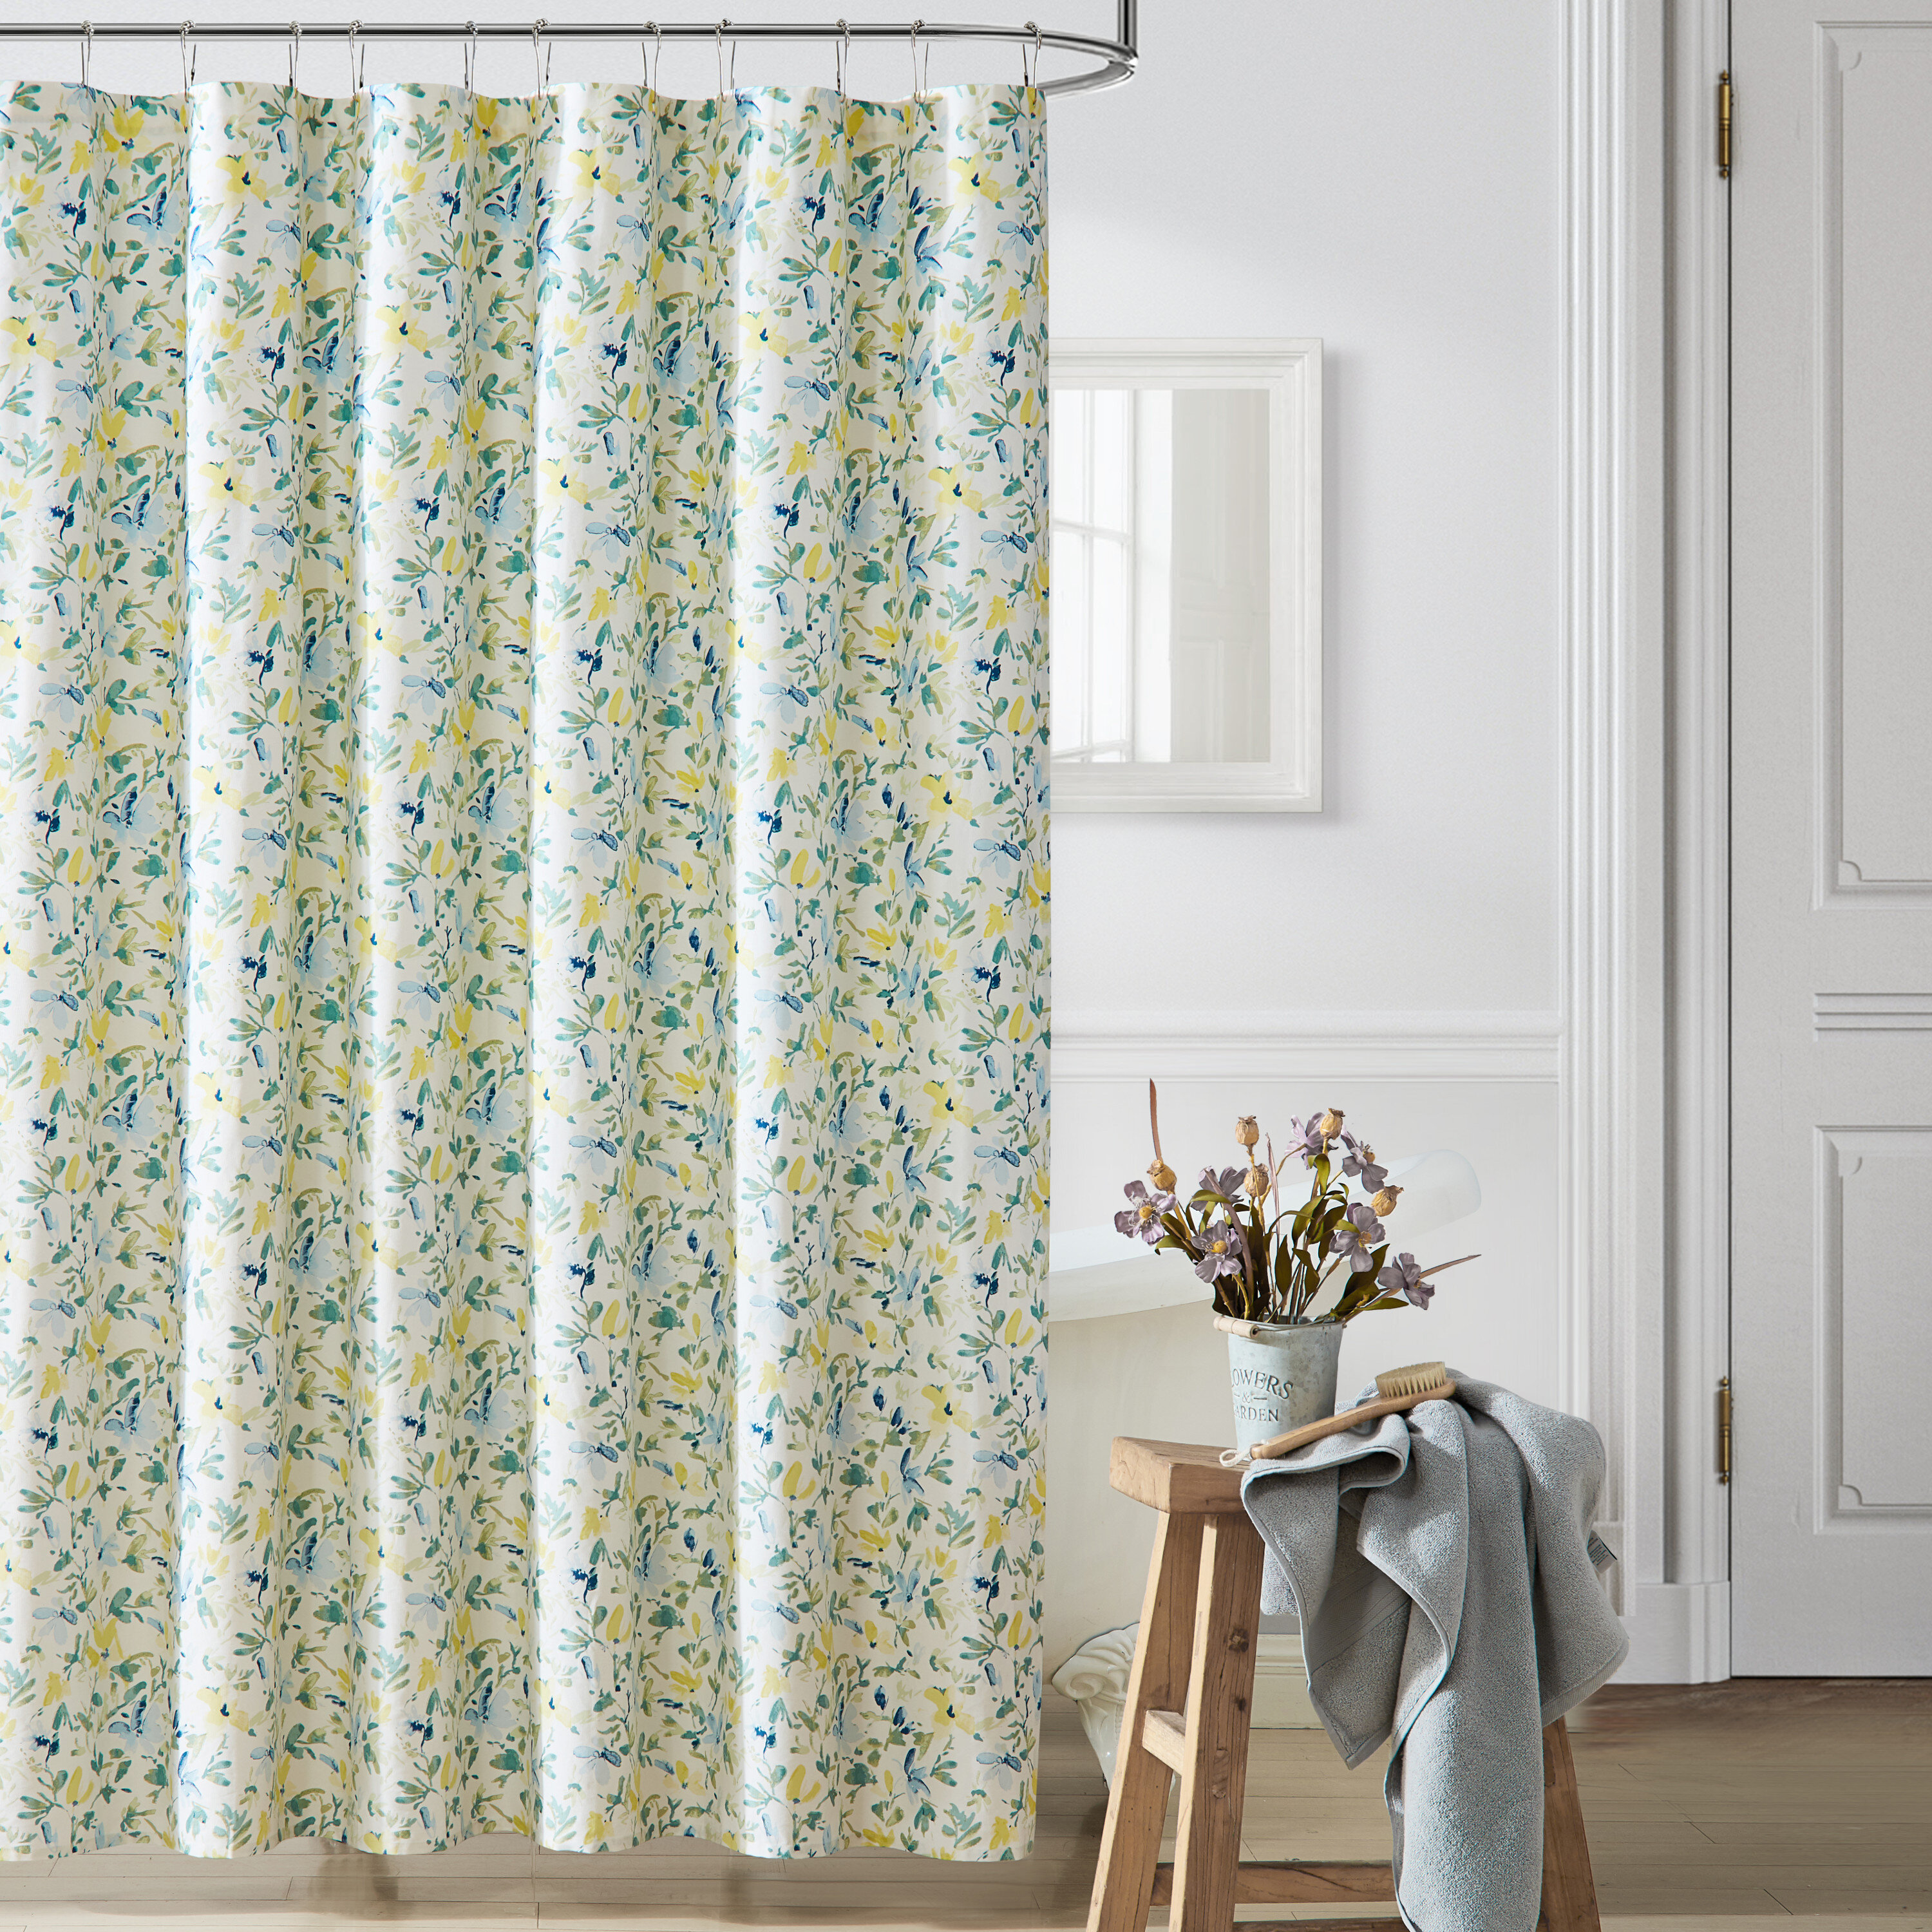 Laura Ashley Peva Shower Curtain Liner 72 x 72 